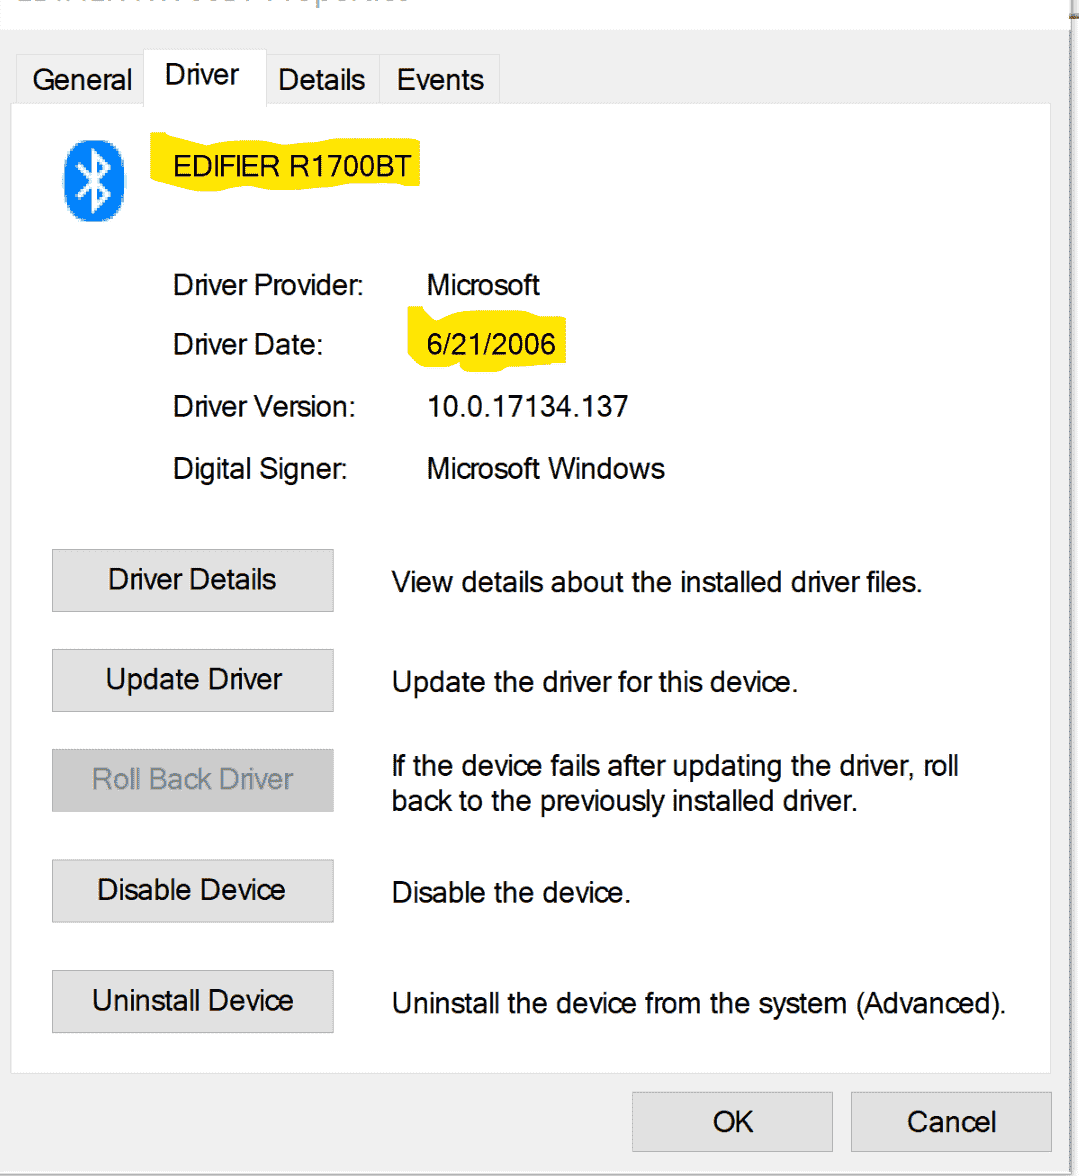 Windows 10 HomeEdition: No correct volume control bluetooth speakers EDIFIER R1700BT b16f8b92-7890-4441-a295-49e4317cb4f3?upload=true.png